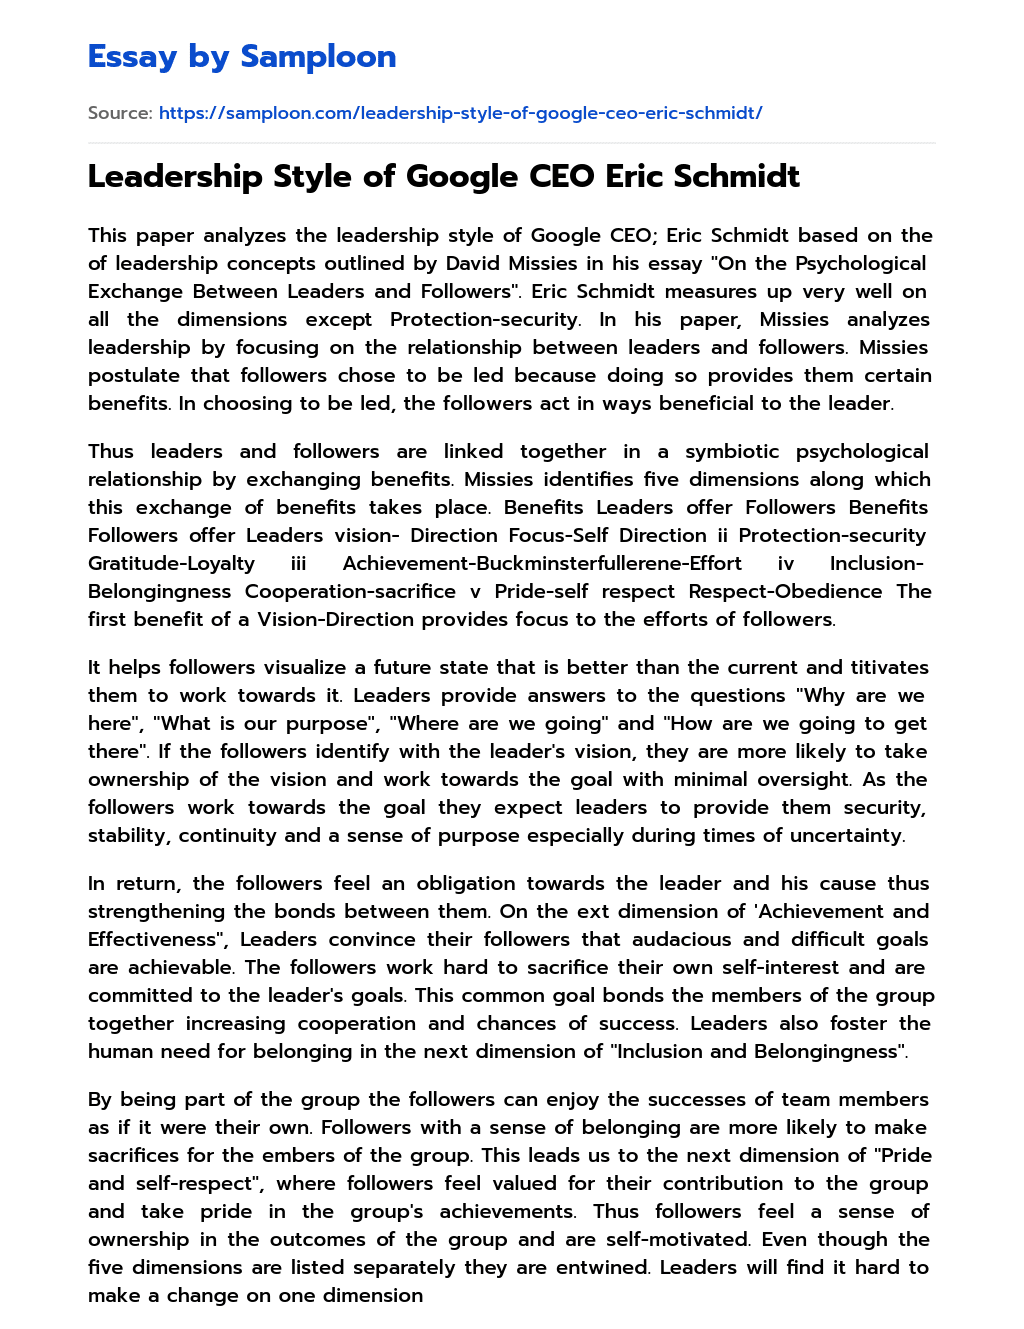 Leadership Style of Google CEO Eric Schmidt essay